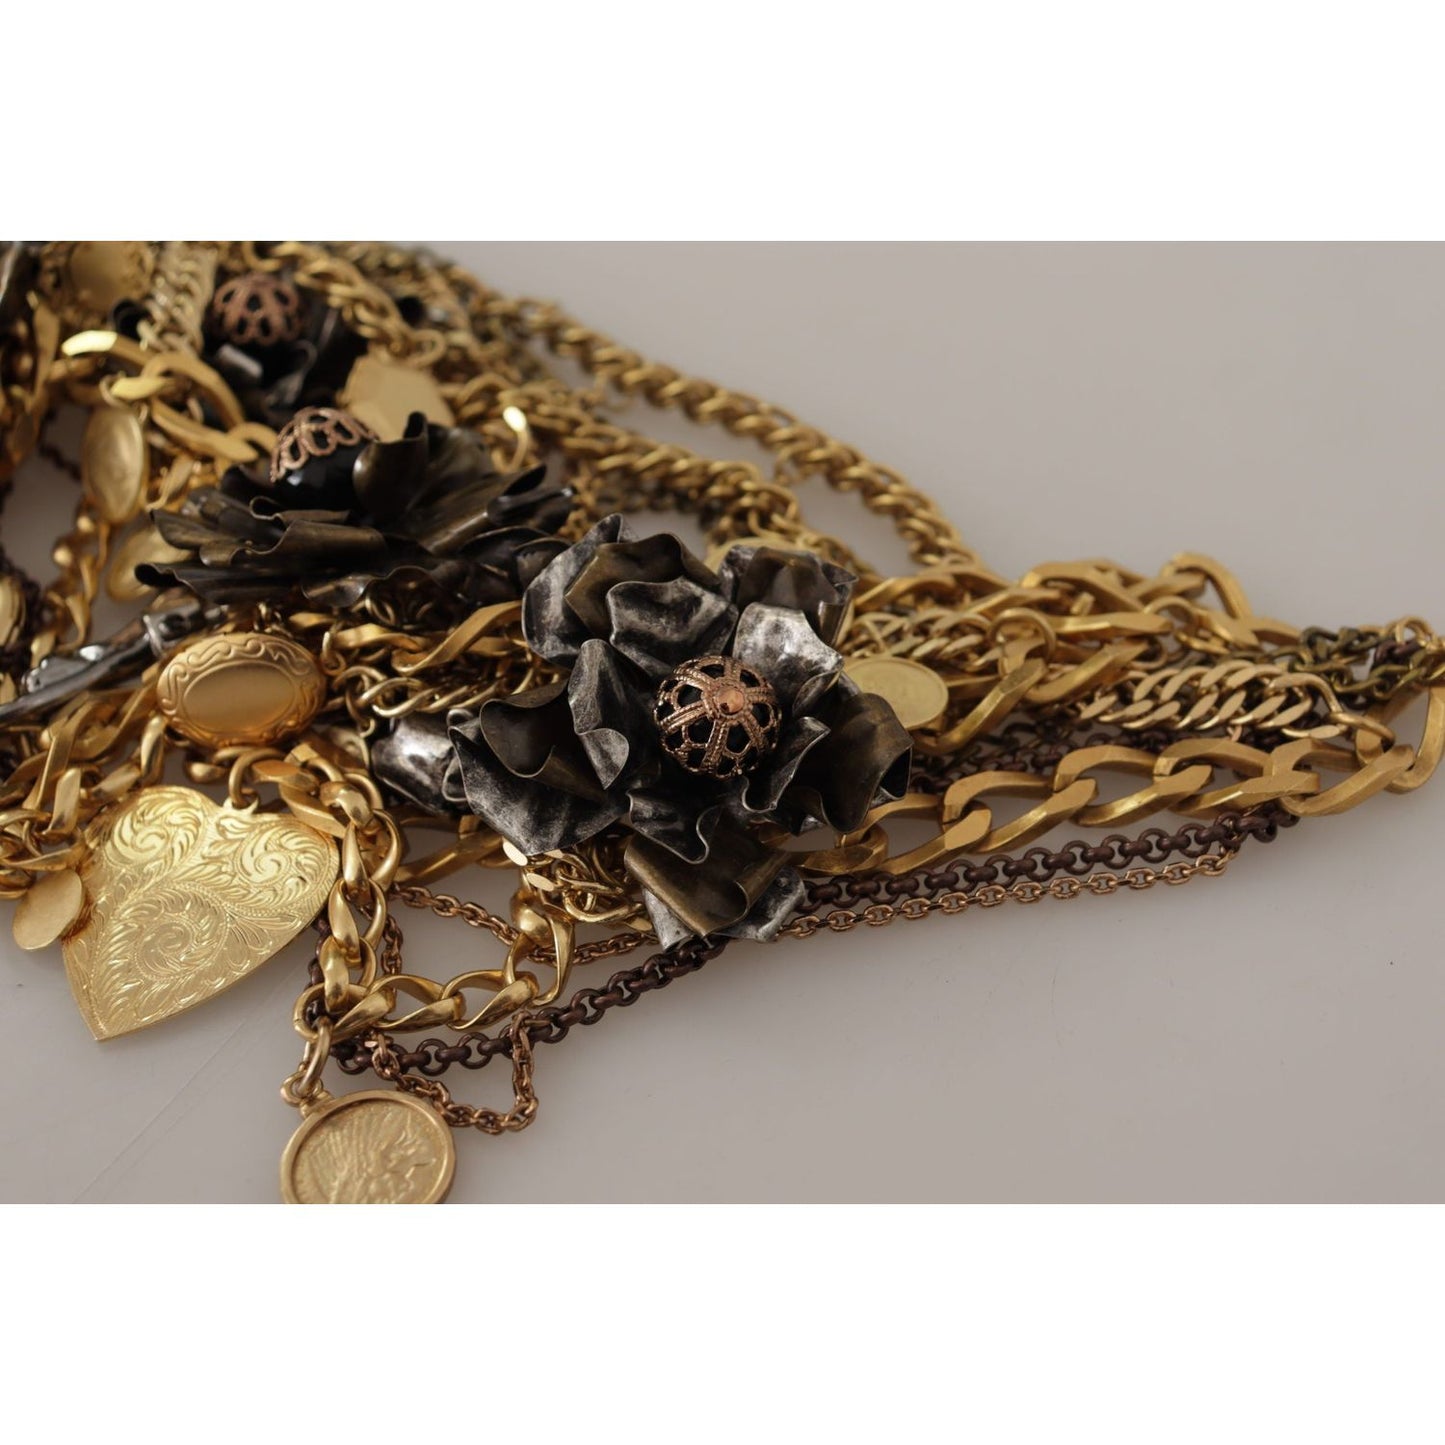 Dolce & Gabbana Sicilian Glamour Gold Statement Necklace WOMAN NECKLACE gold-brass-sicily-charm-heart-statement-necklace